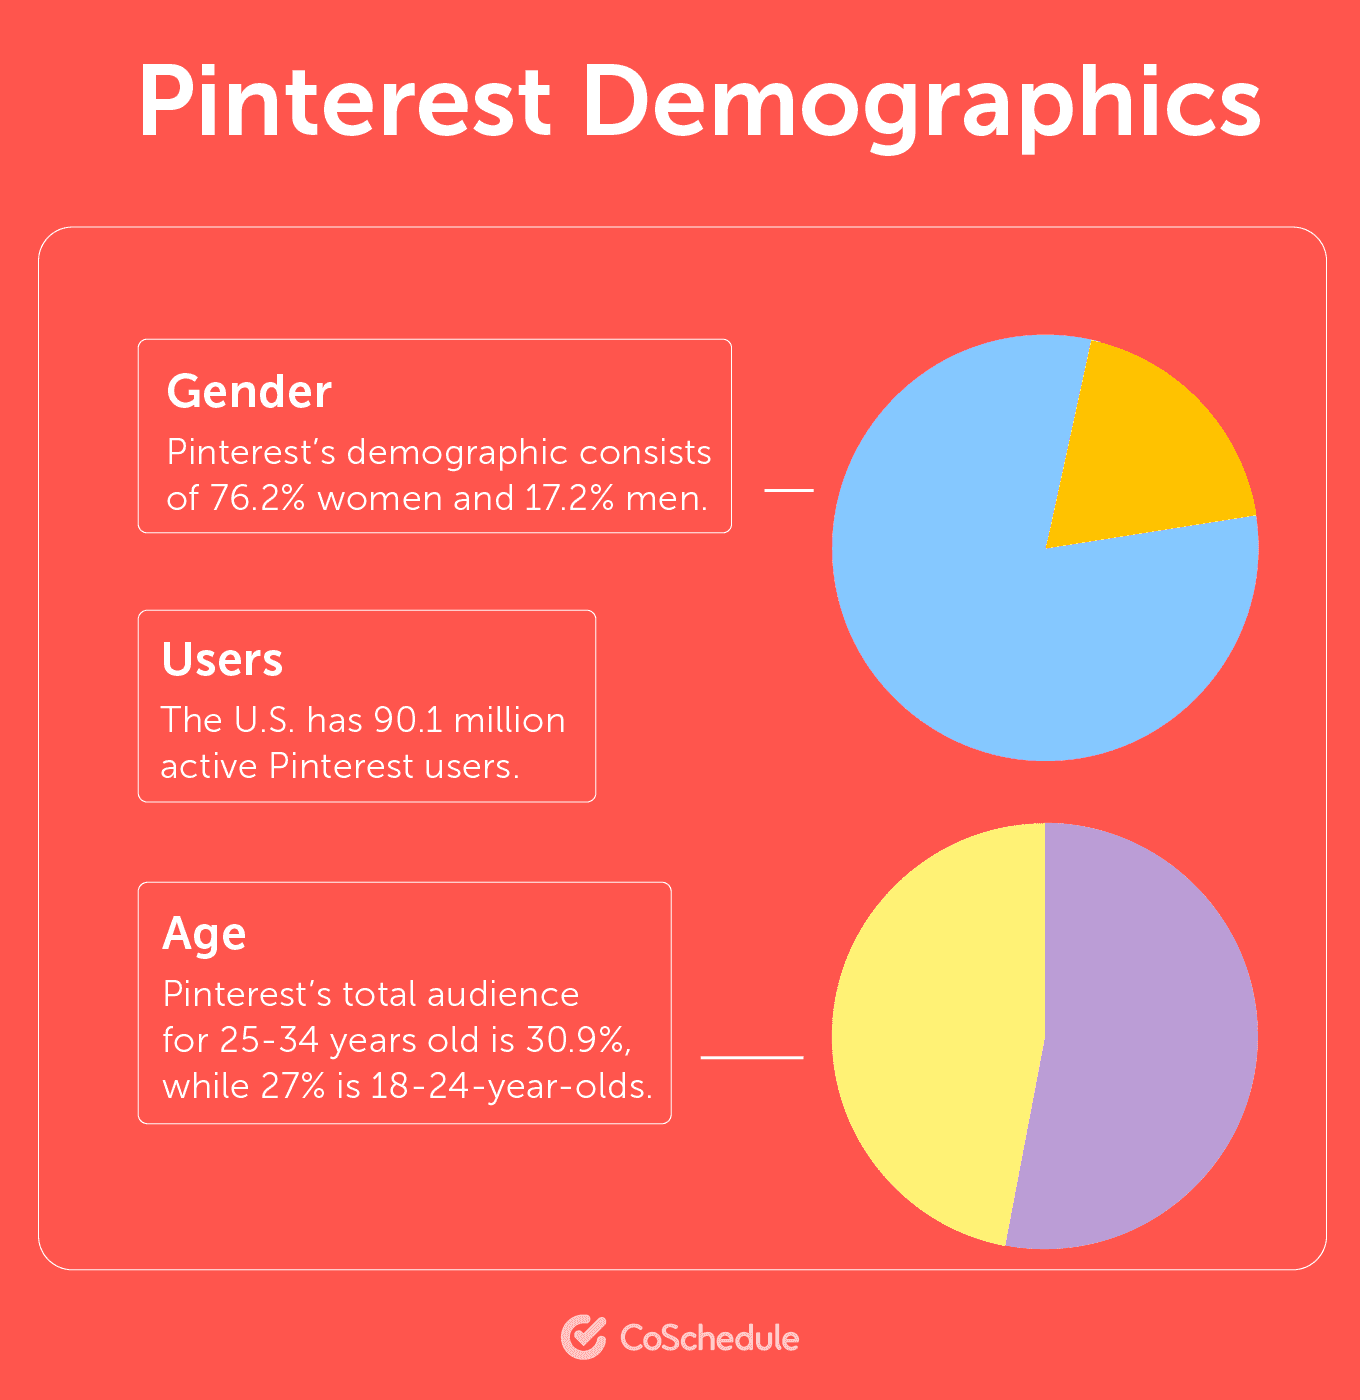 Pinterest demographics with pie charts